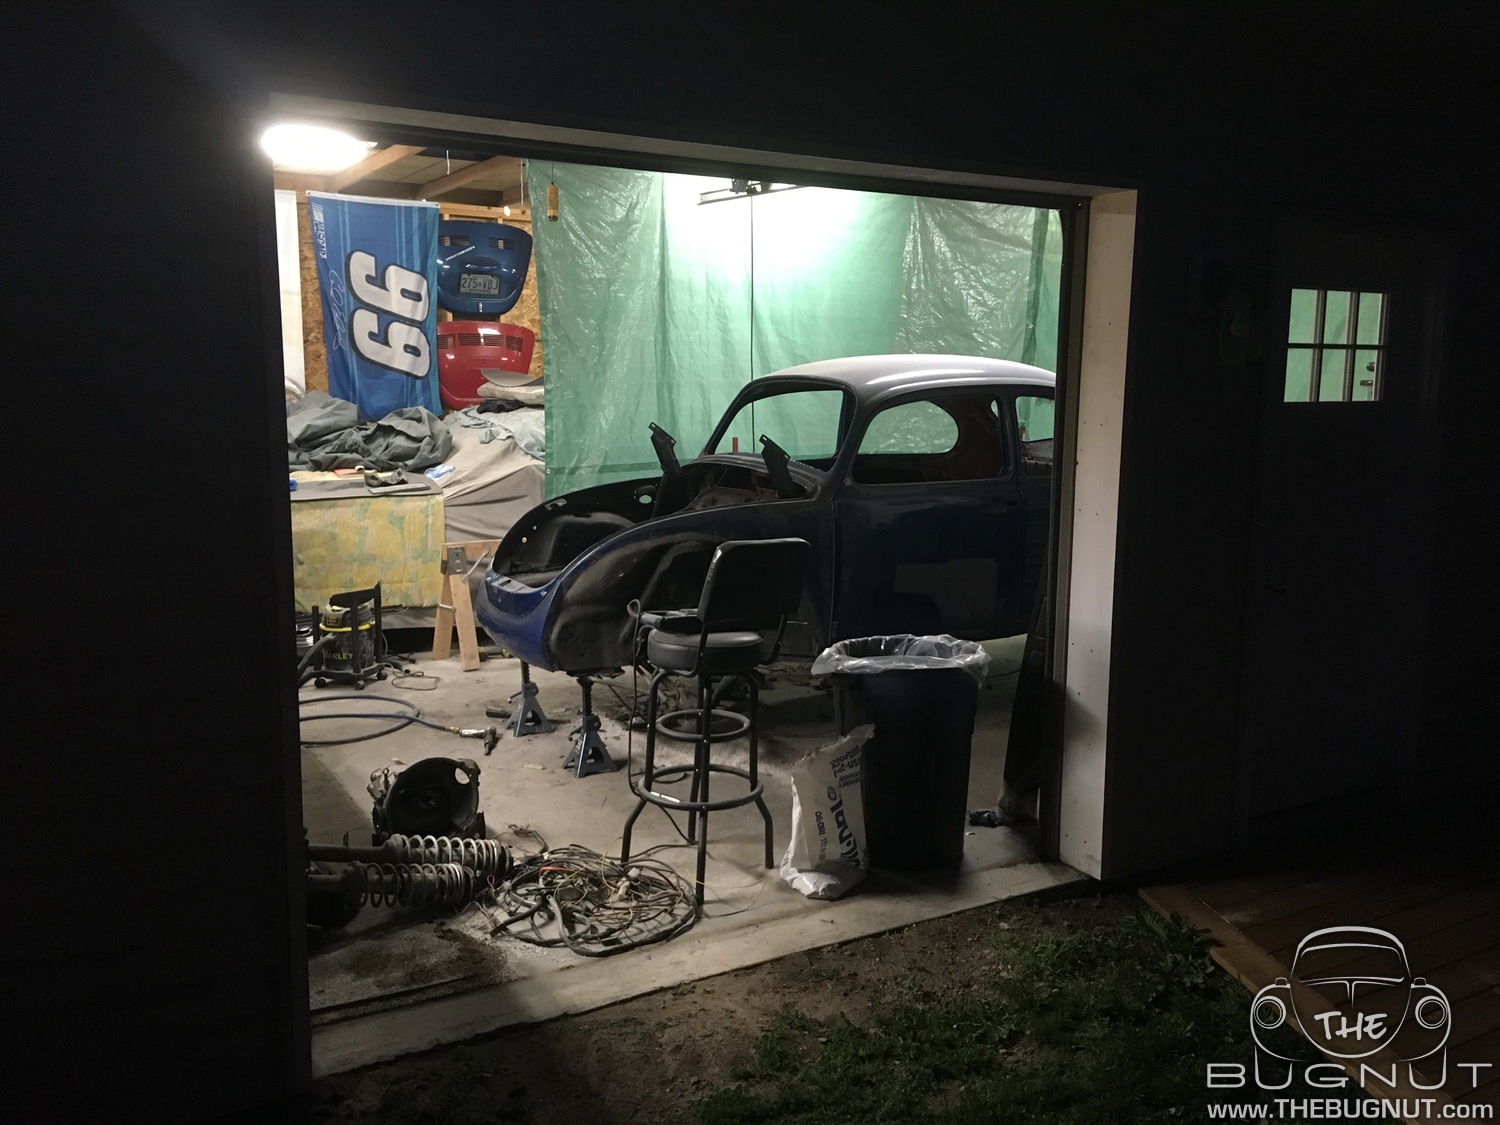 VW Super Beetle in Garage at Night